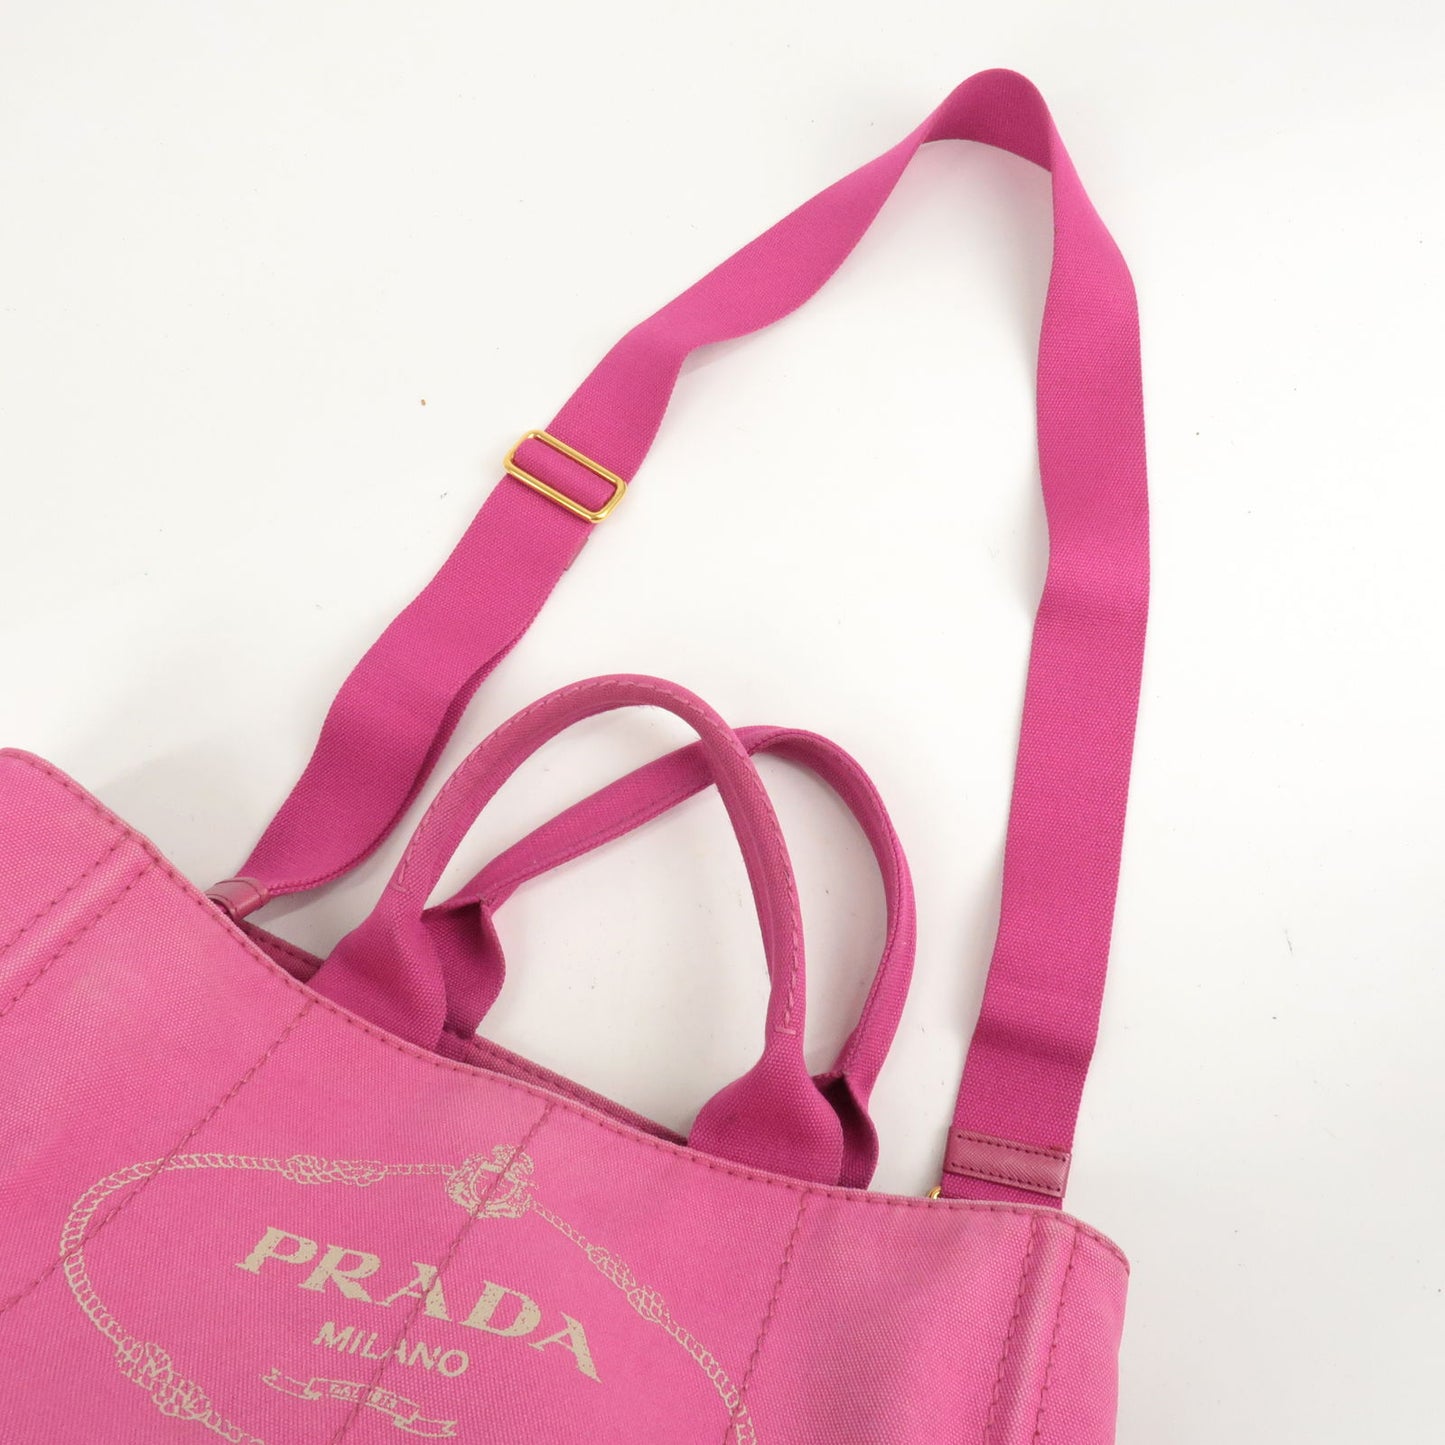 PRADA Canapa Canvas 2 Way Shoulder Bag Hand Bag Pink 1BG642